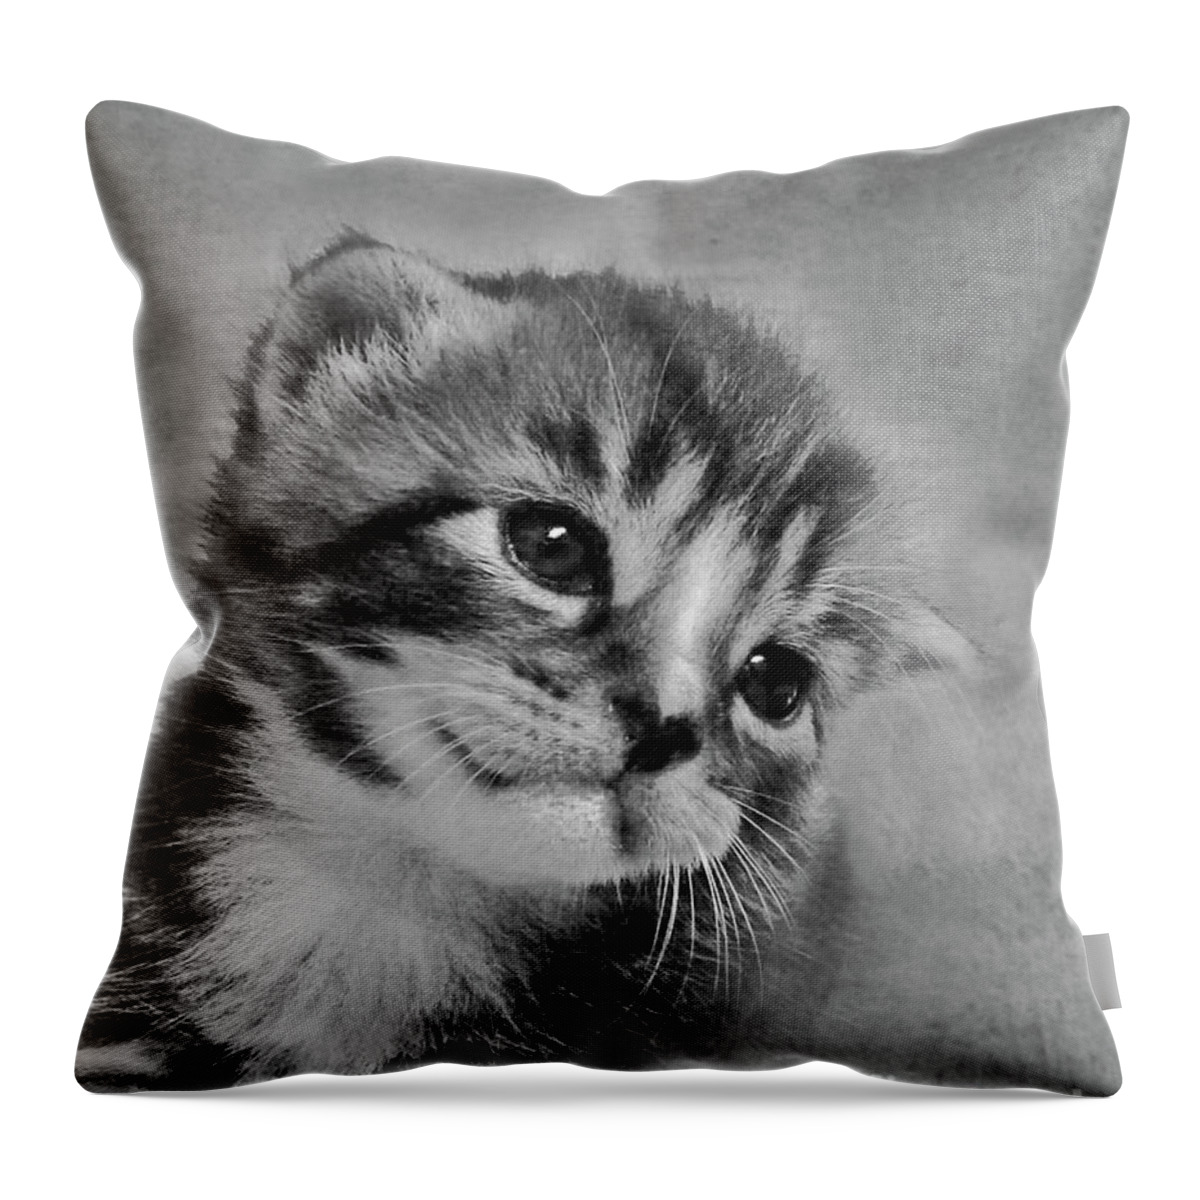 Kitten Throw Pillow featuring the photograph Sweet Kitten by Terri Waters